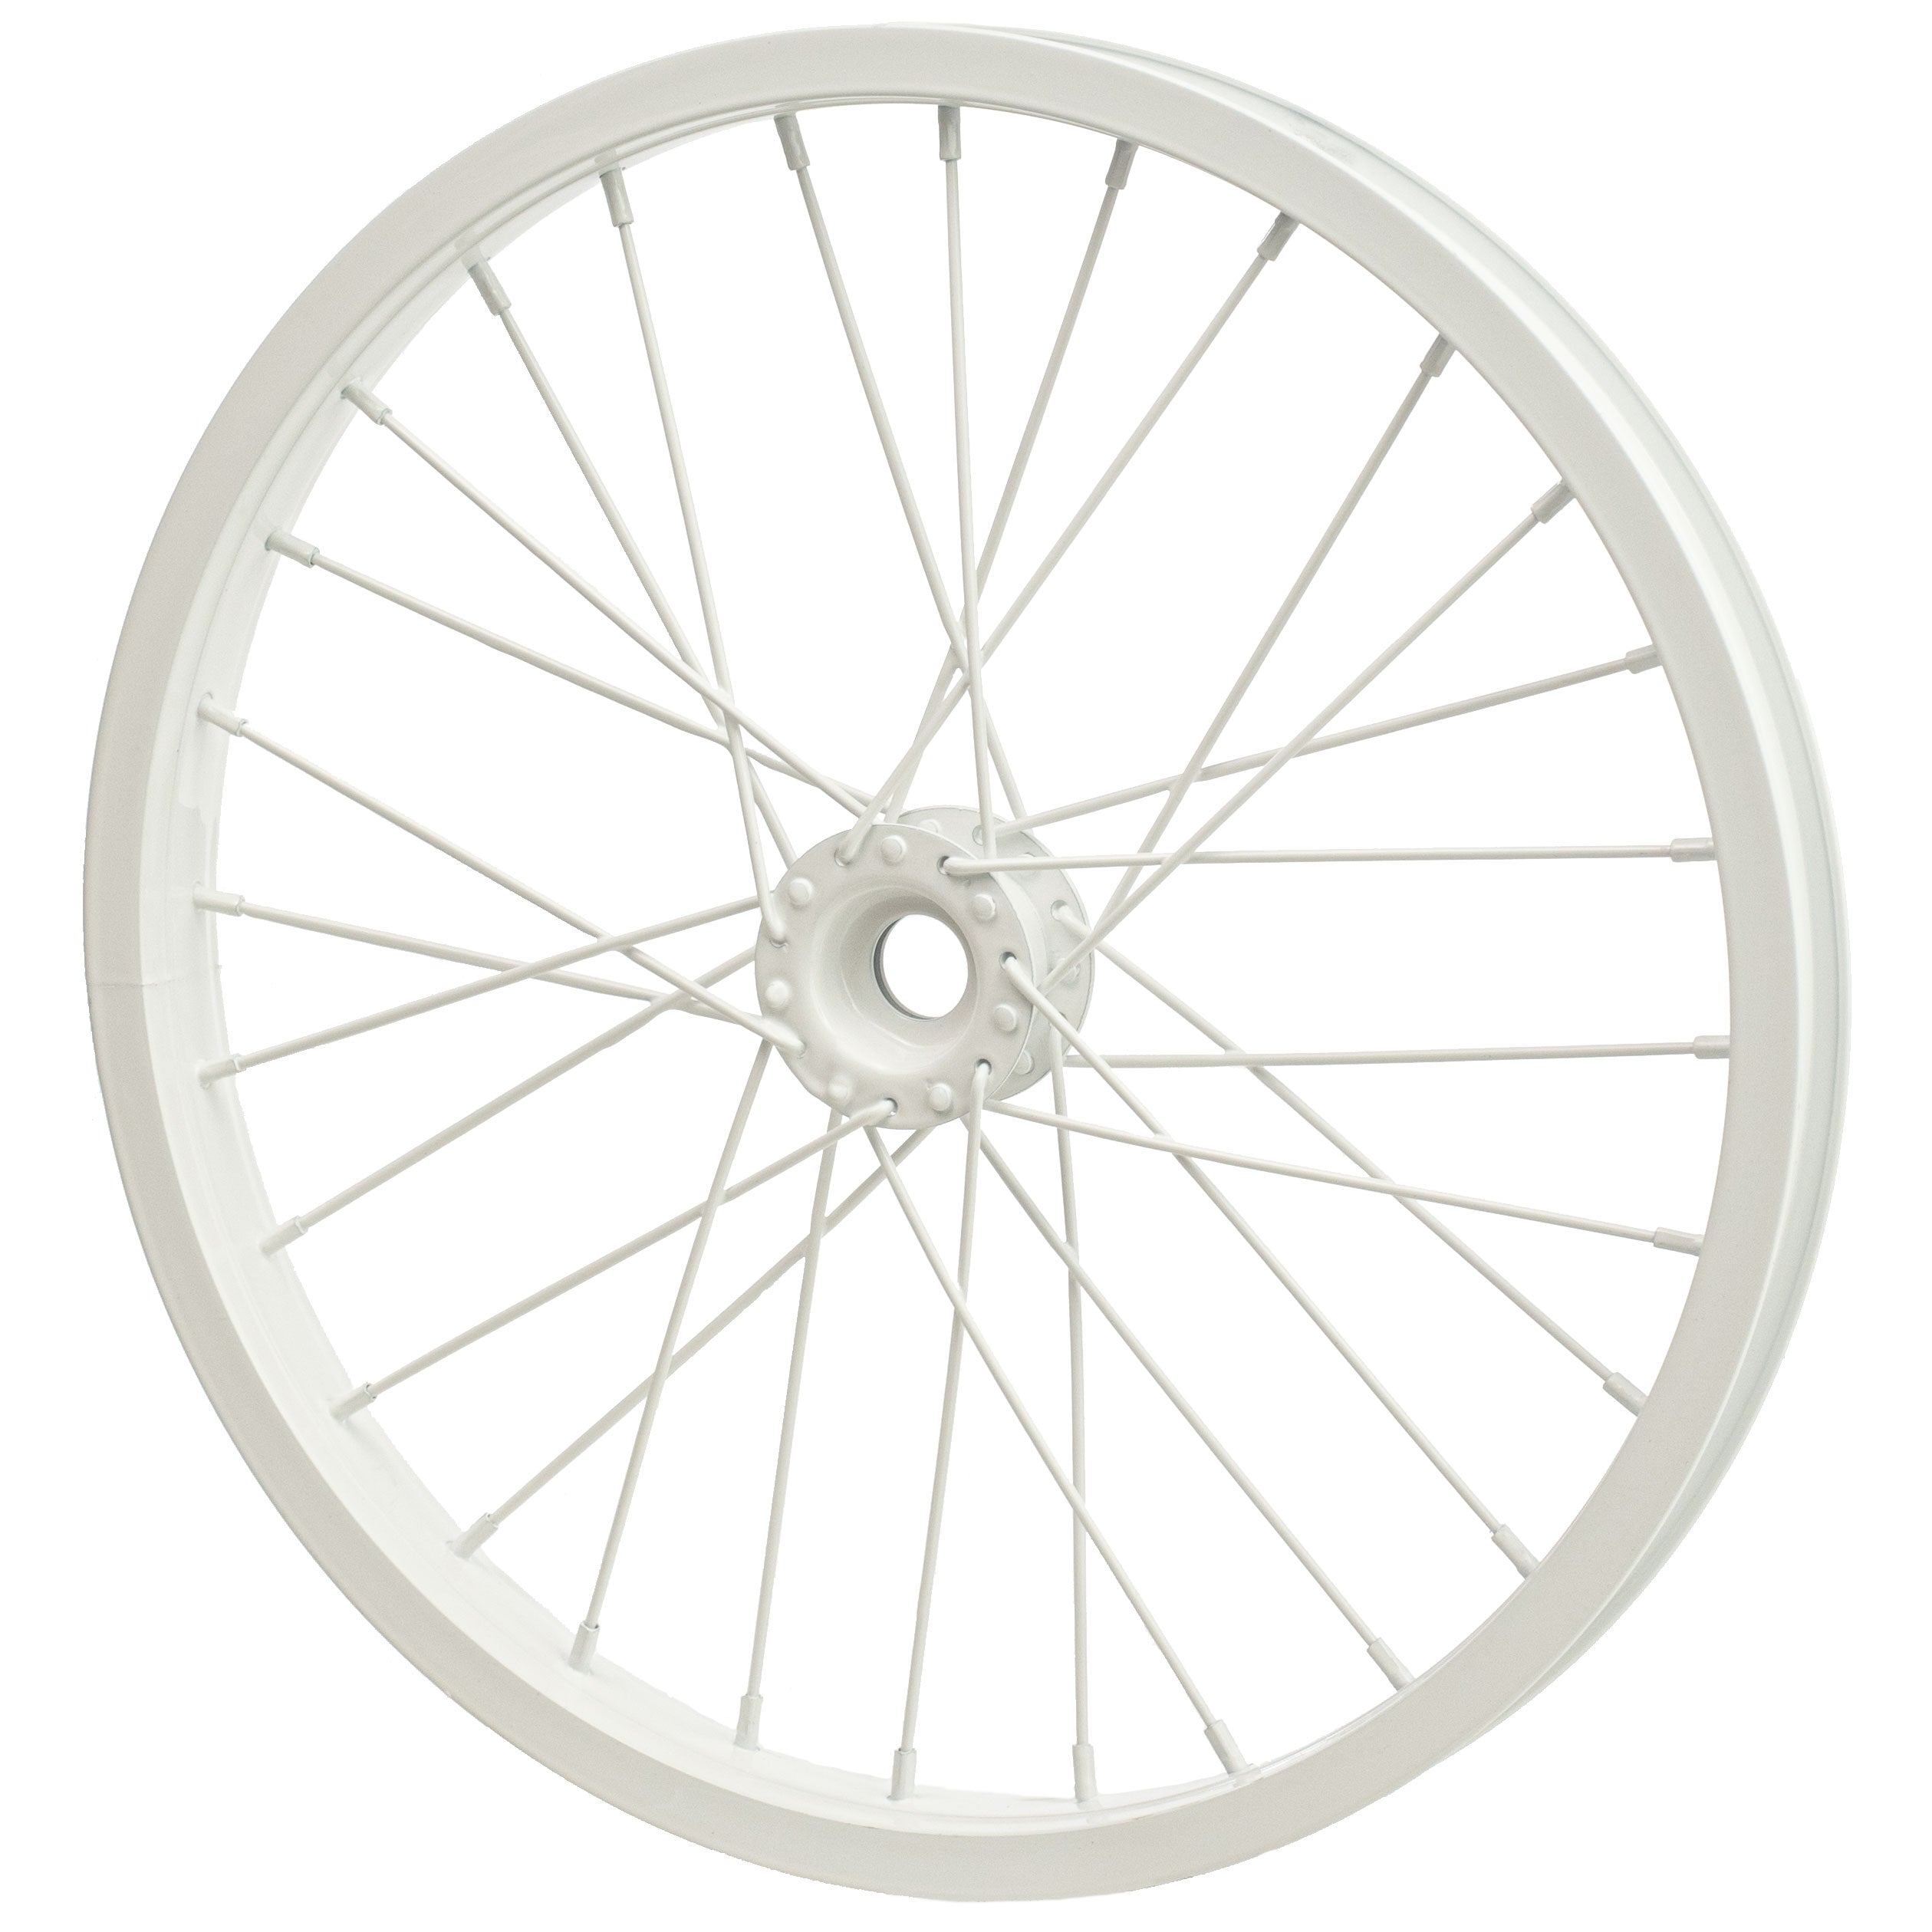 20" Decorative Bicycle Rim: White